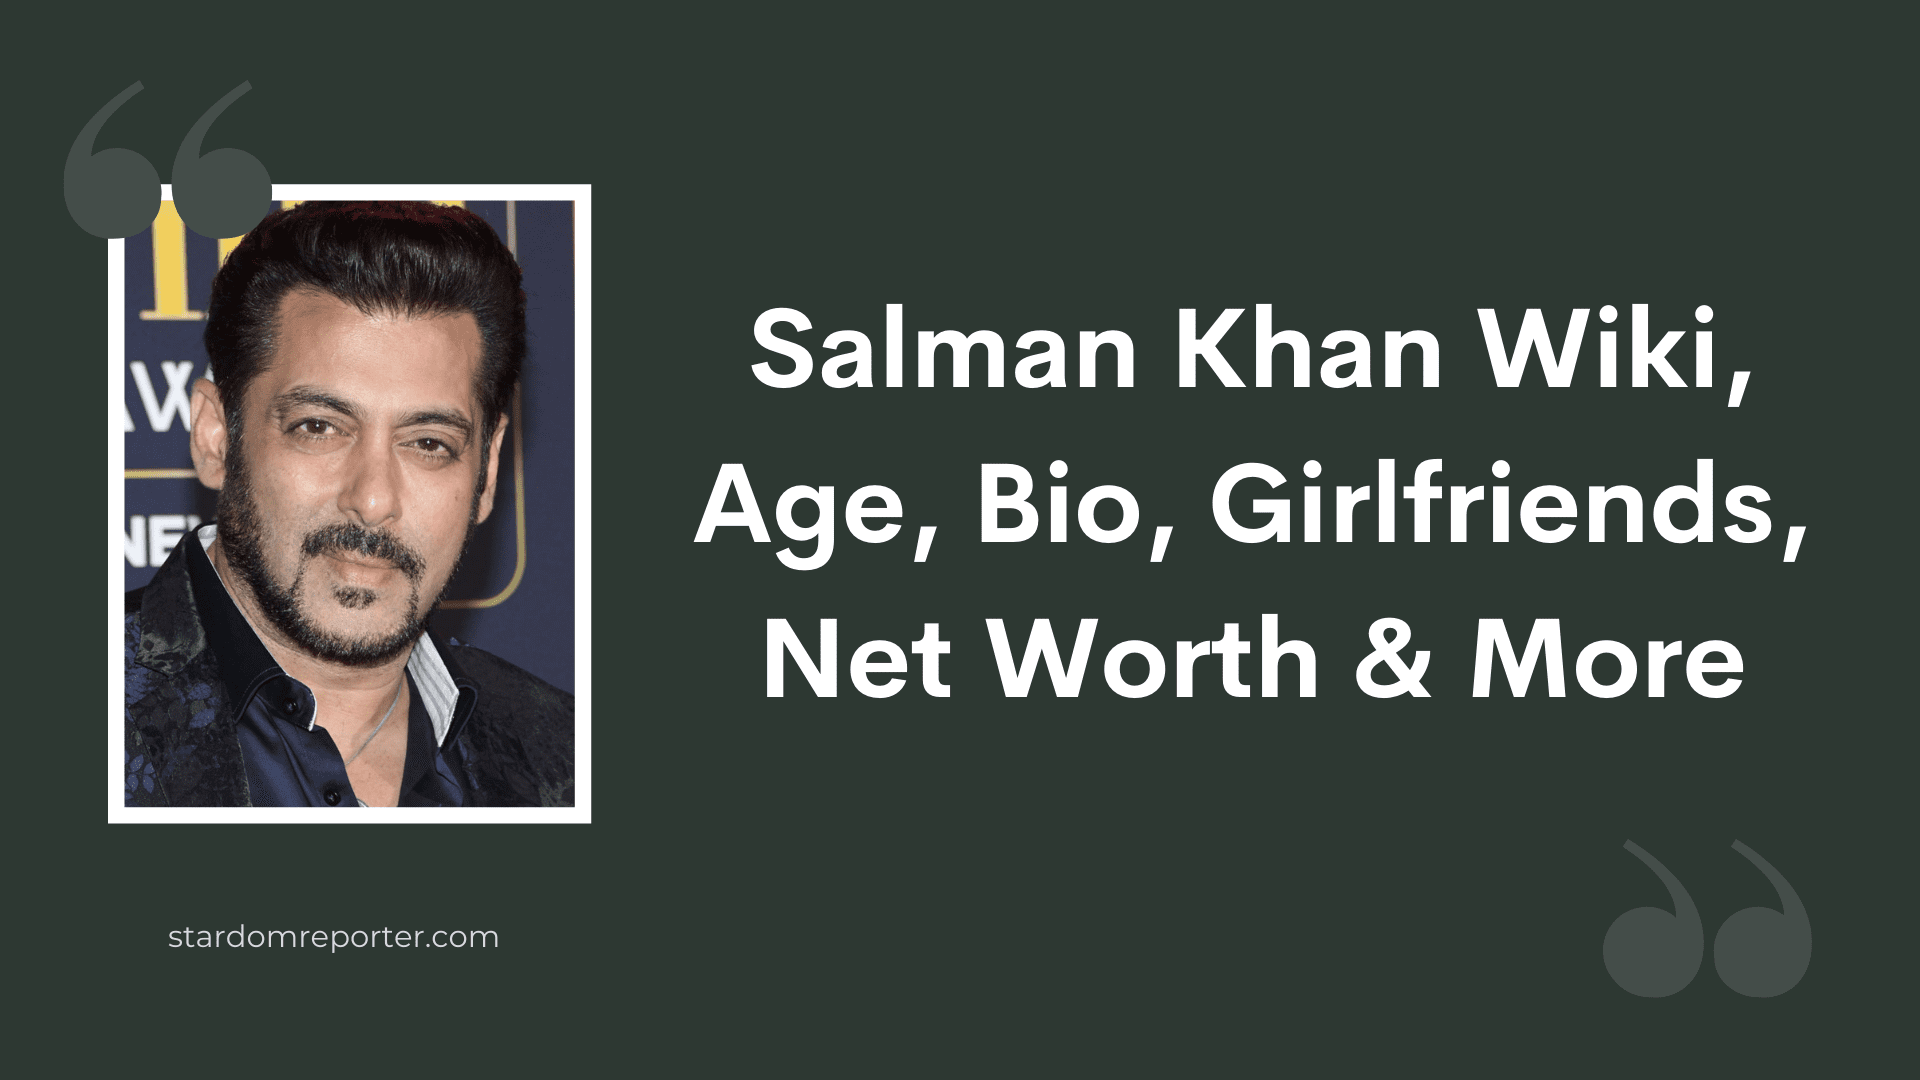 Salman Khan Wiki, Age, Bio, Girlfriends, Net Worth & More - 21